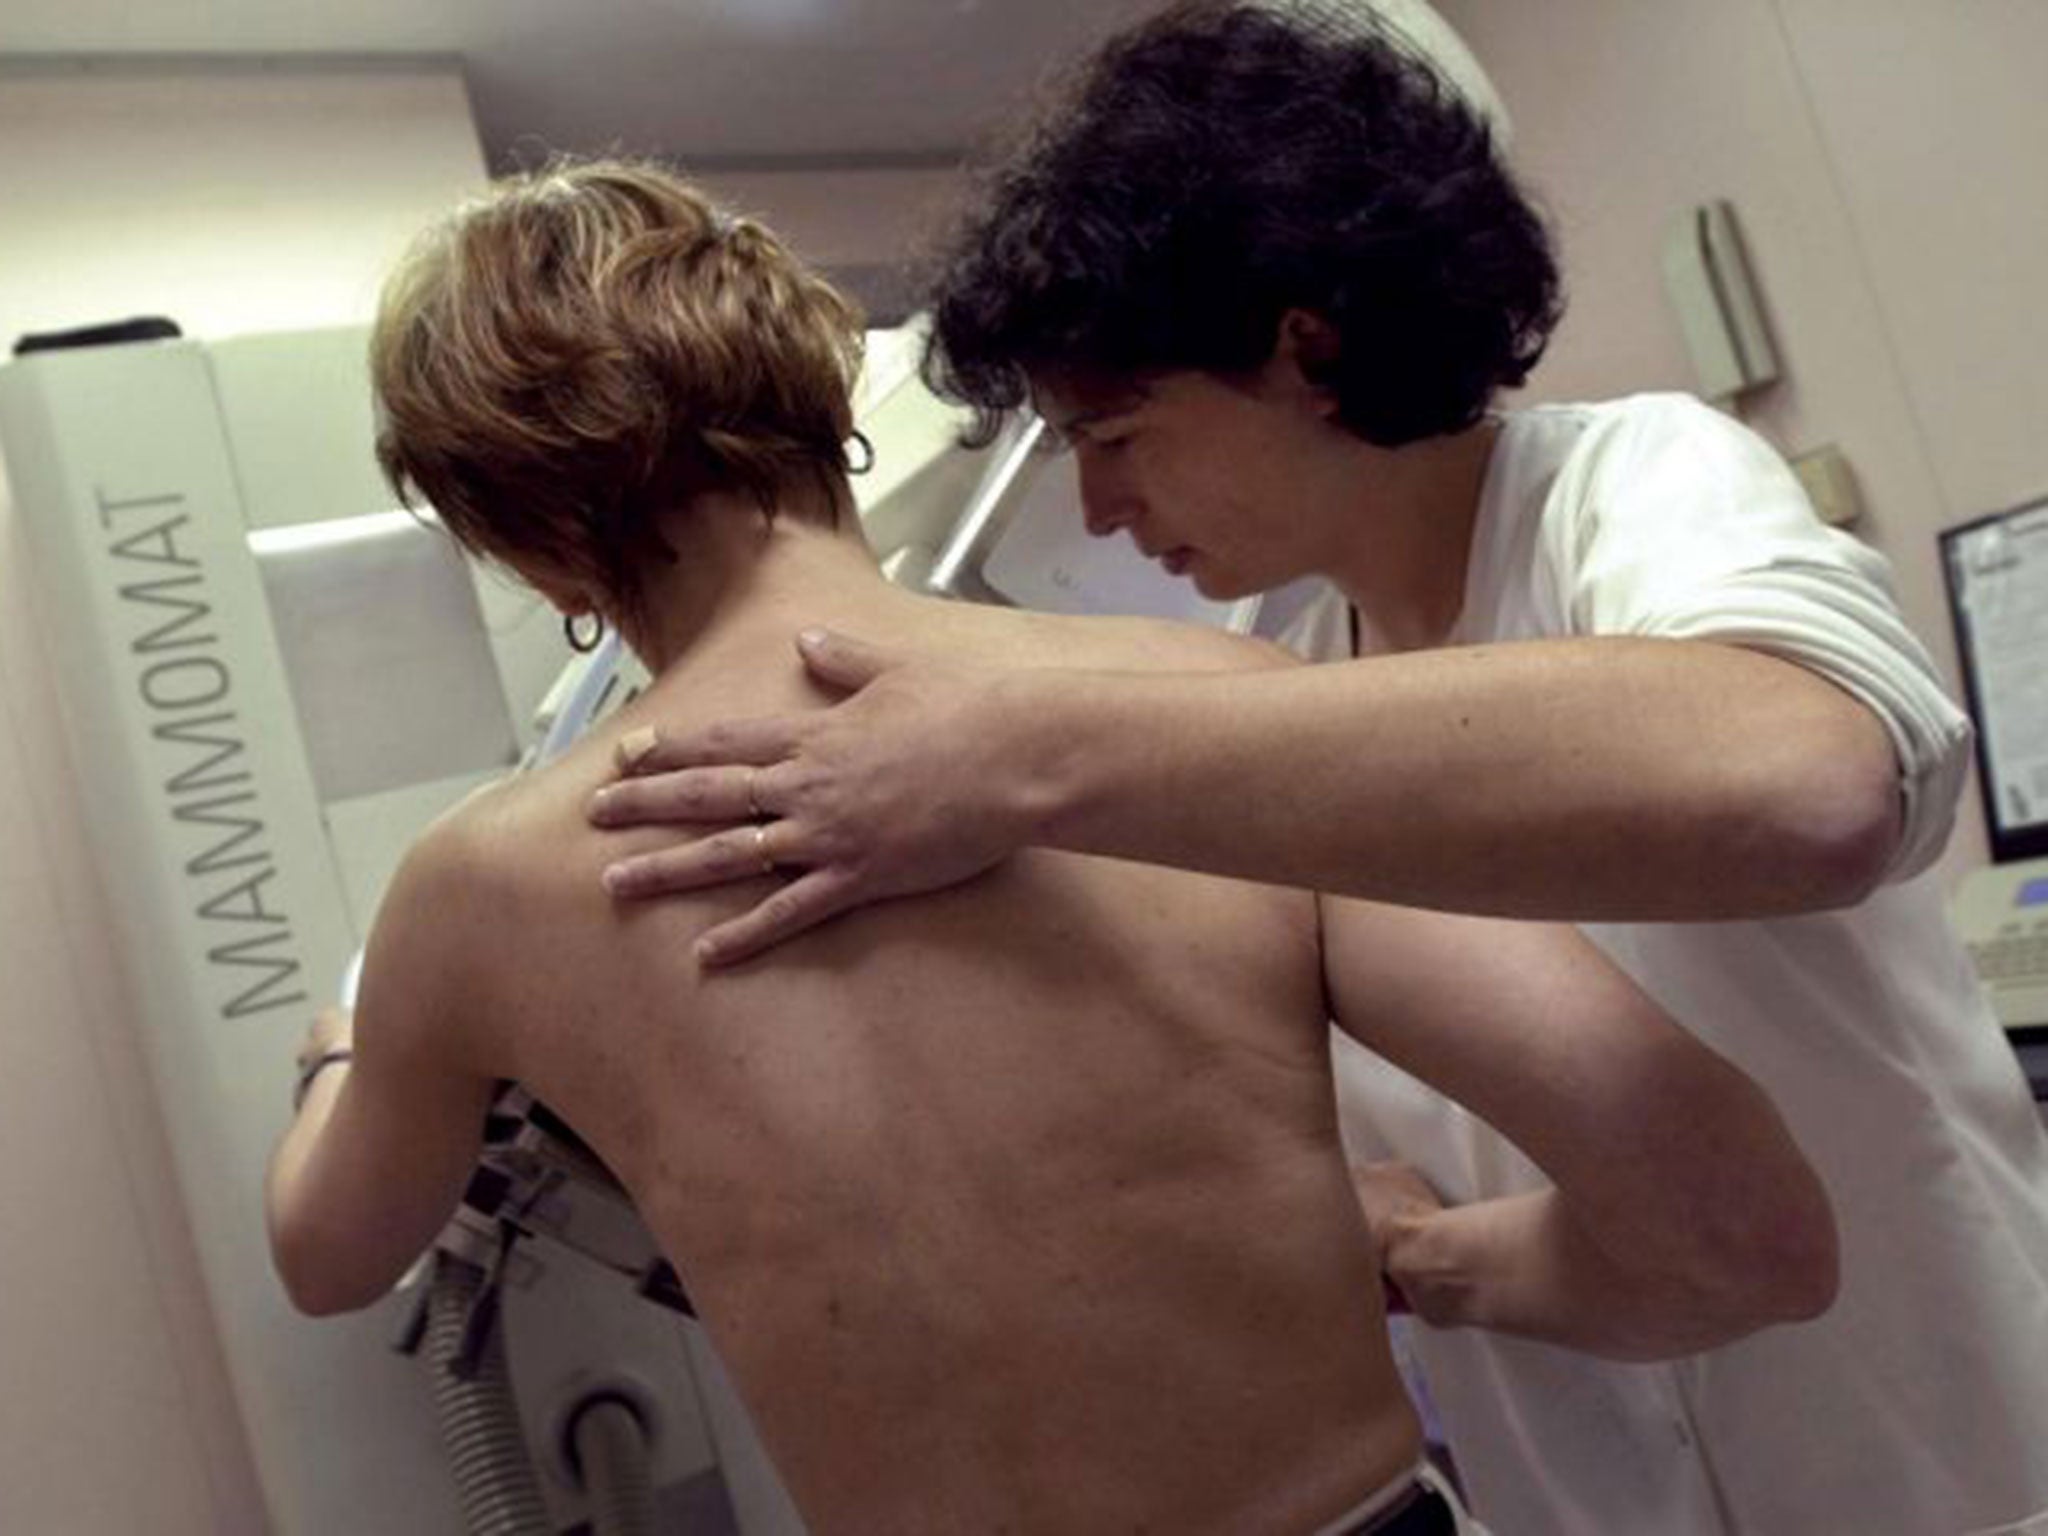 A nurse performs a mammography